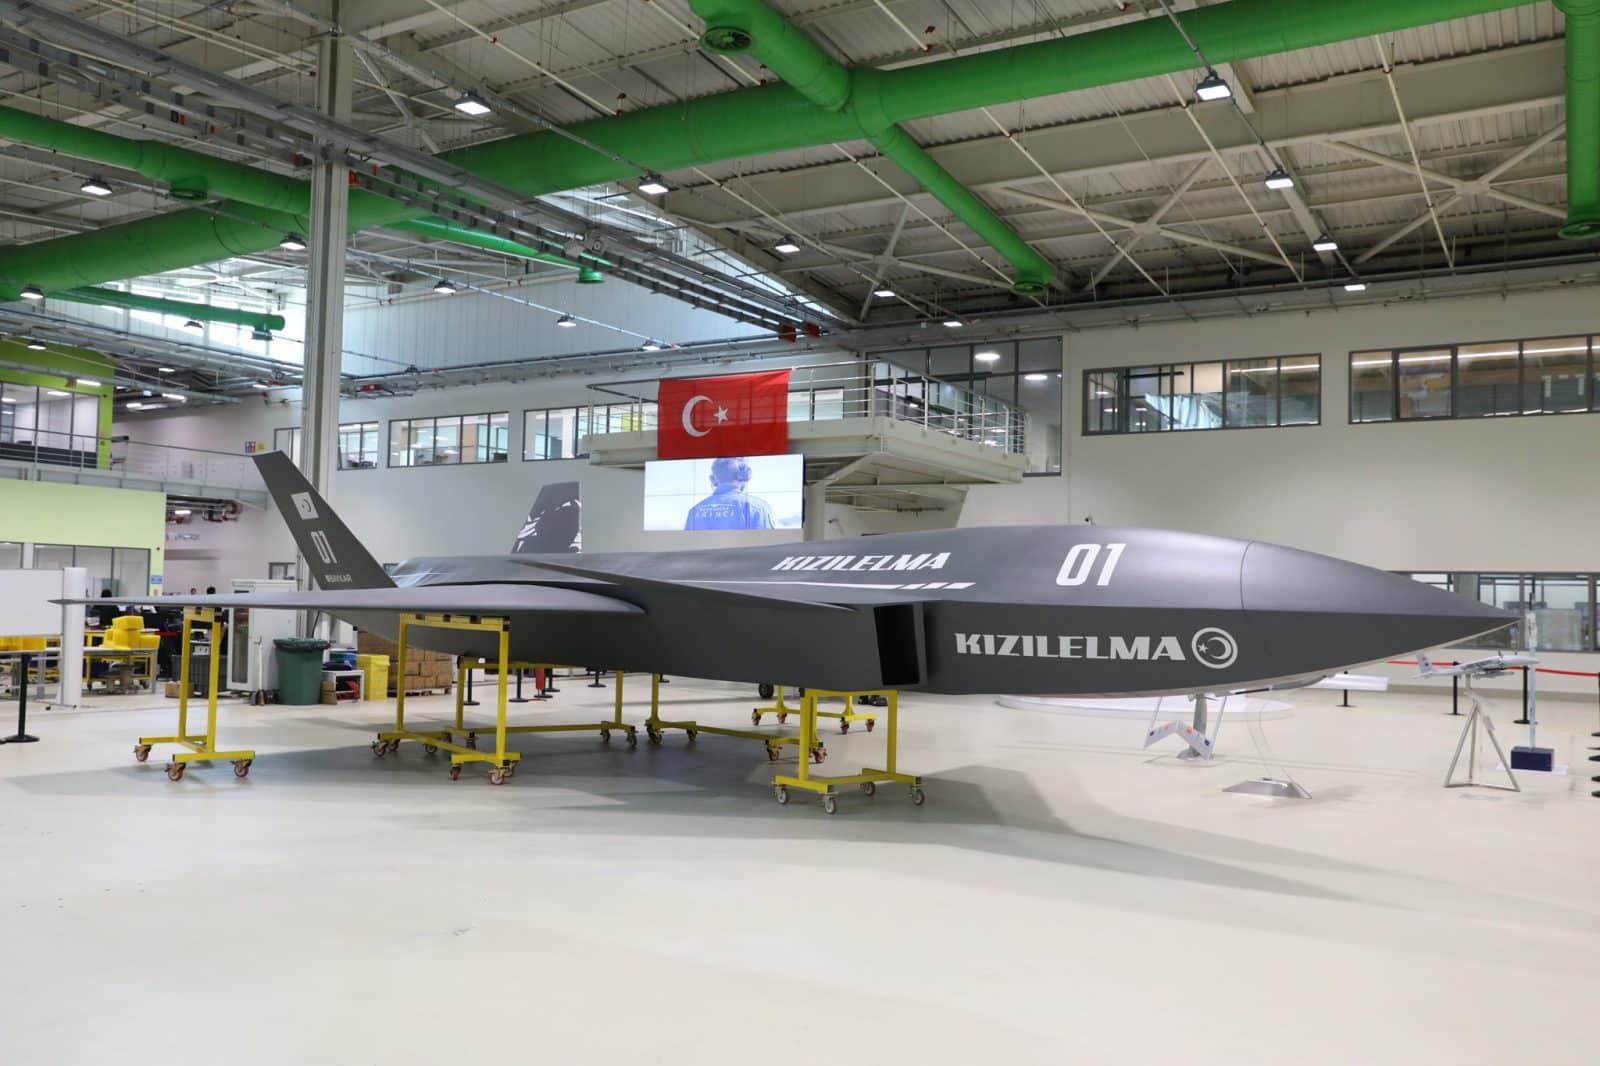 Turkish company will produce new Bayraktar Kizilelma drone in Ukraine